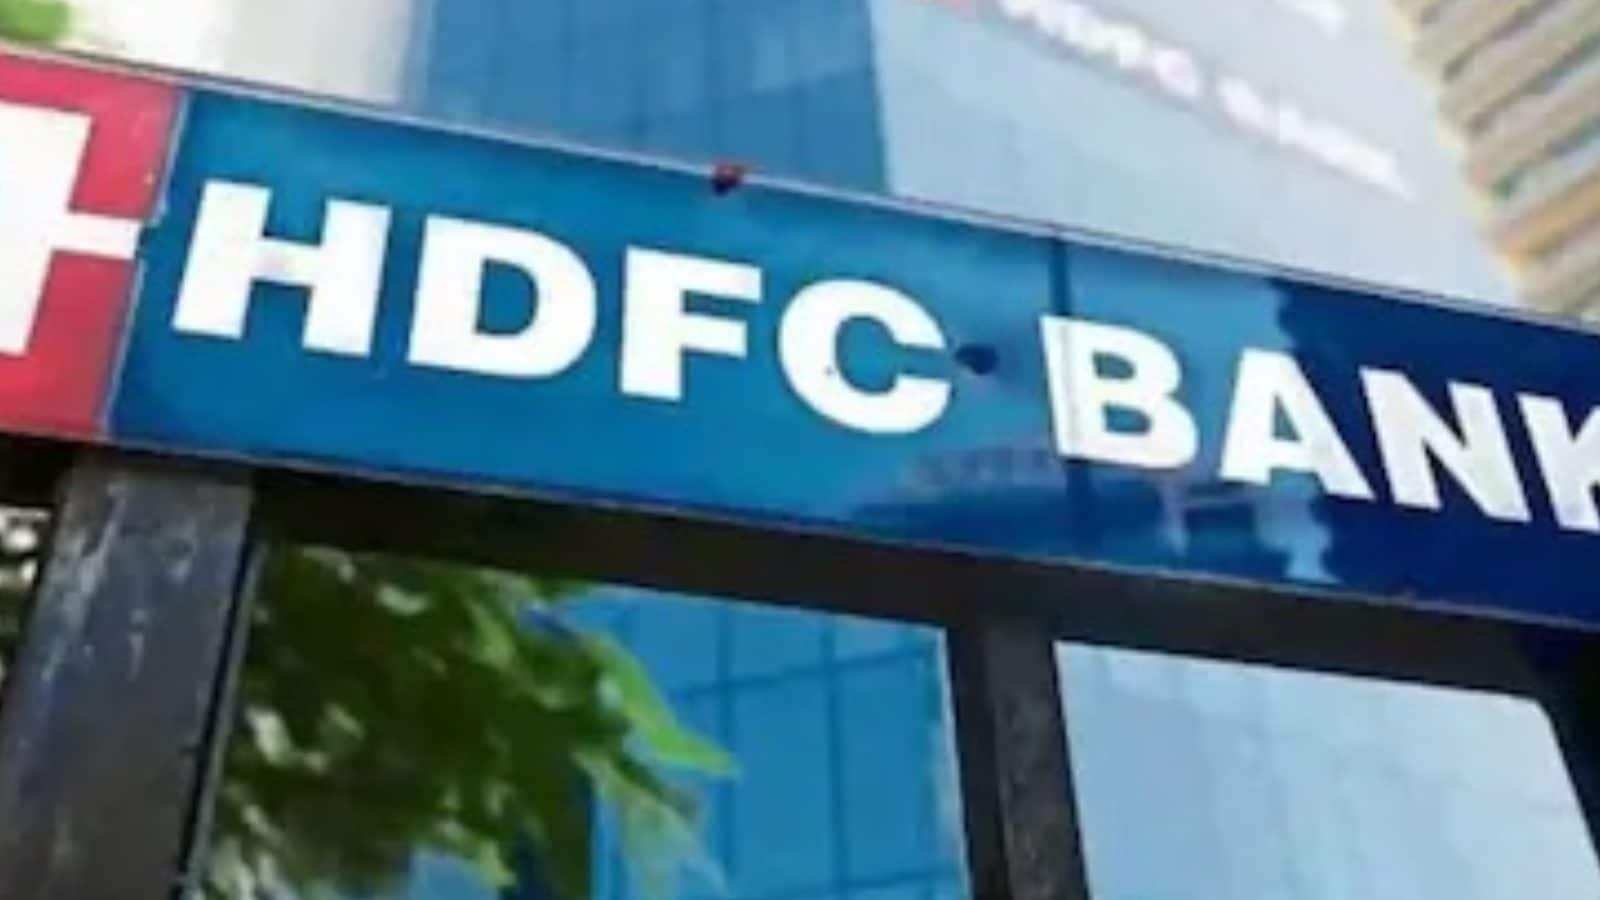 hdfc bank recurring deposit rate